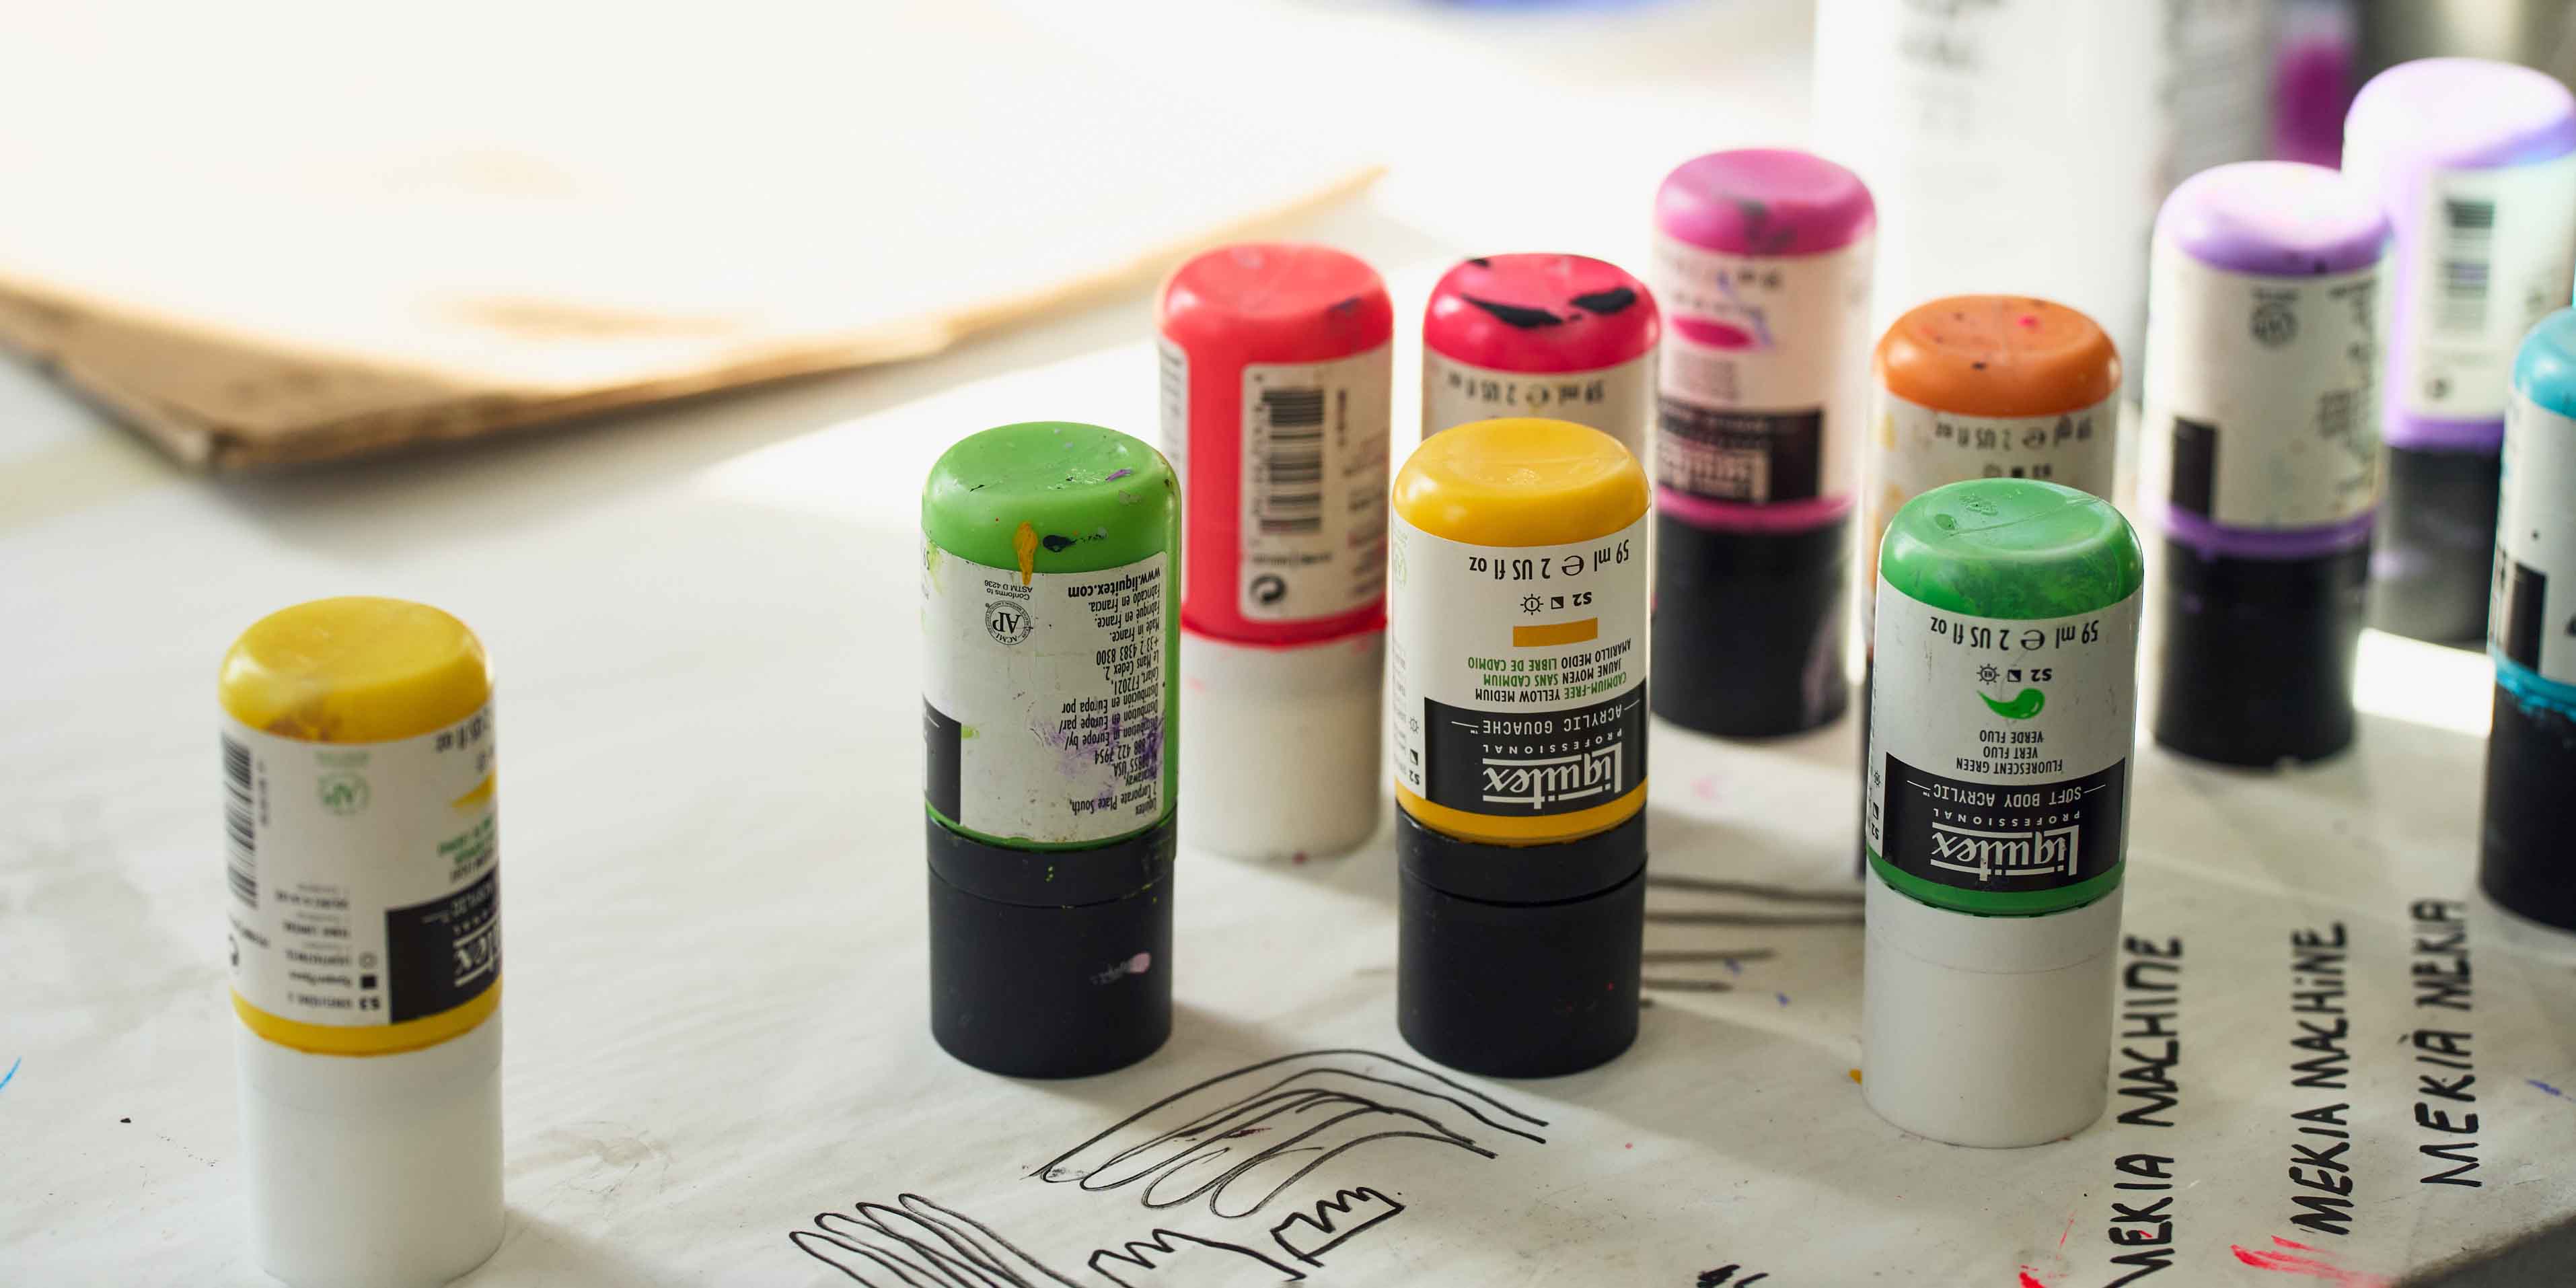 Liquitex Professional Paint Marker Fluorescent Wide Set of 6